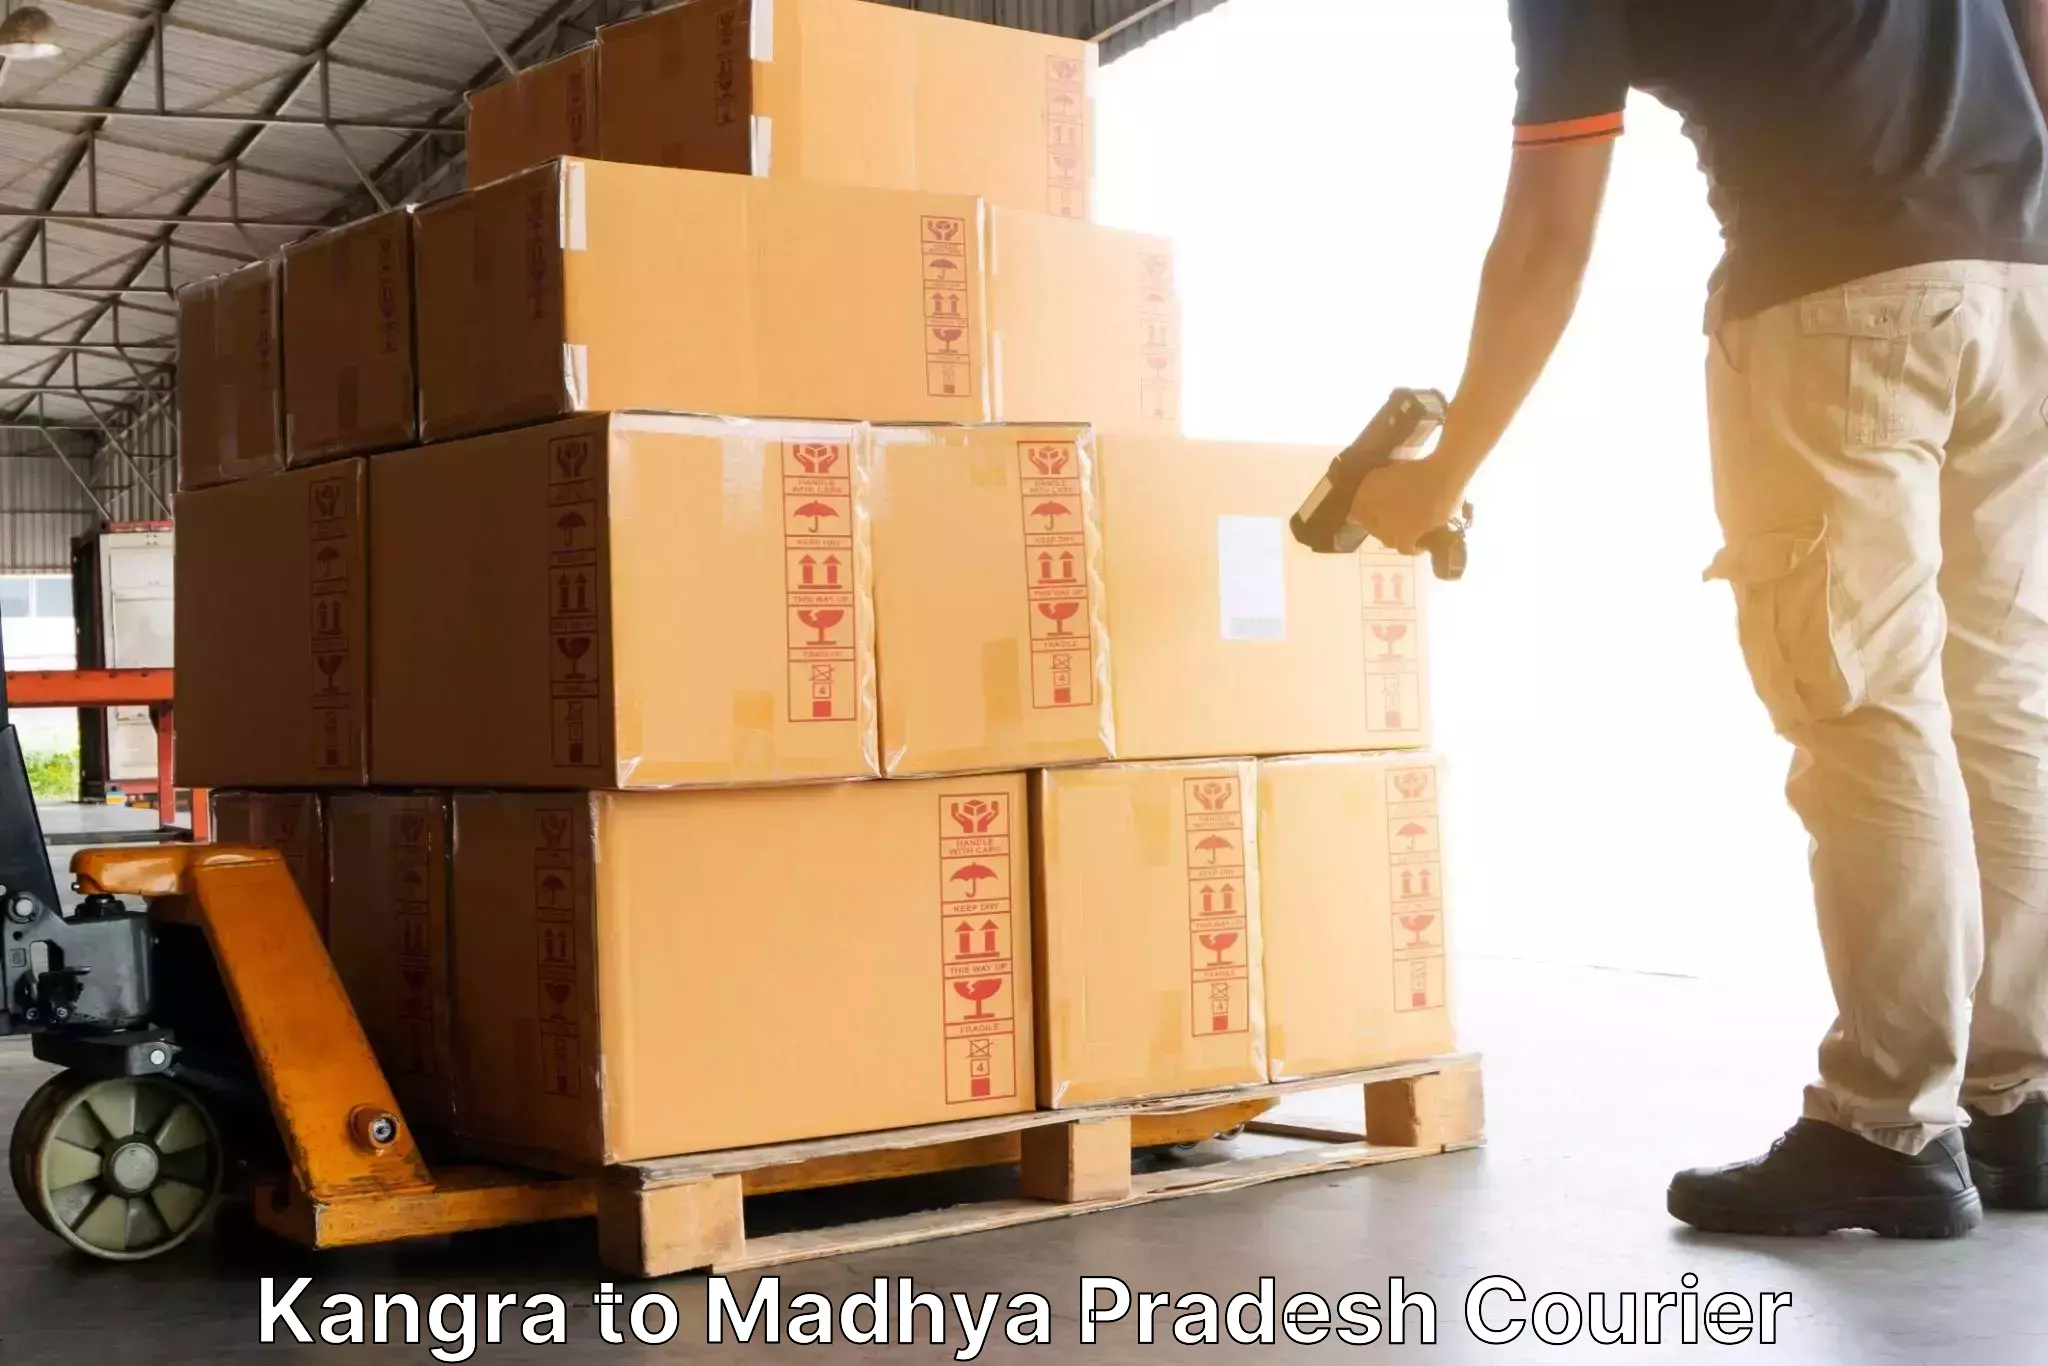 Courier service comparison Kangra to Rahatgarh